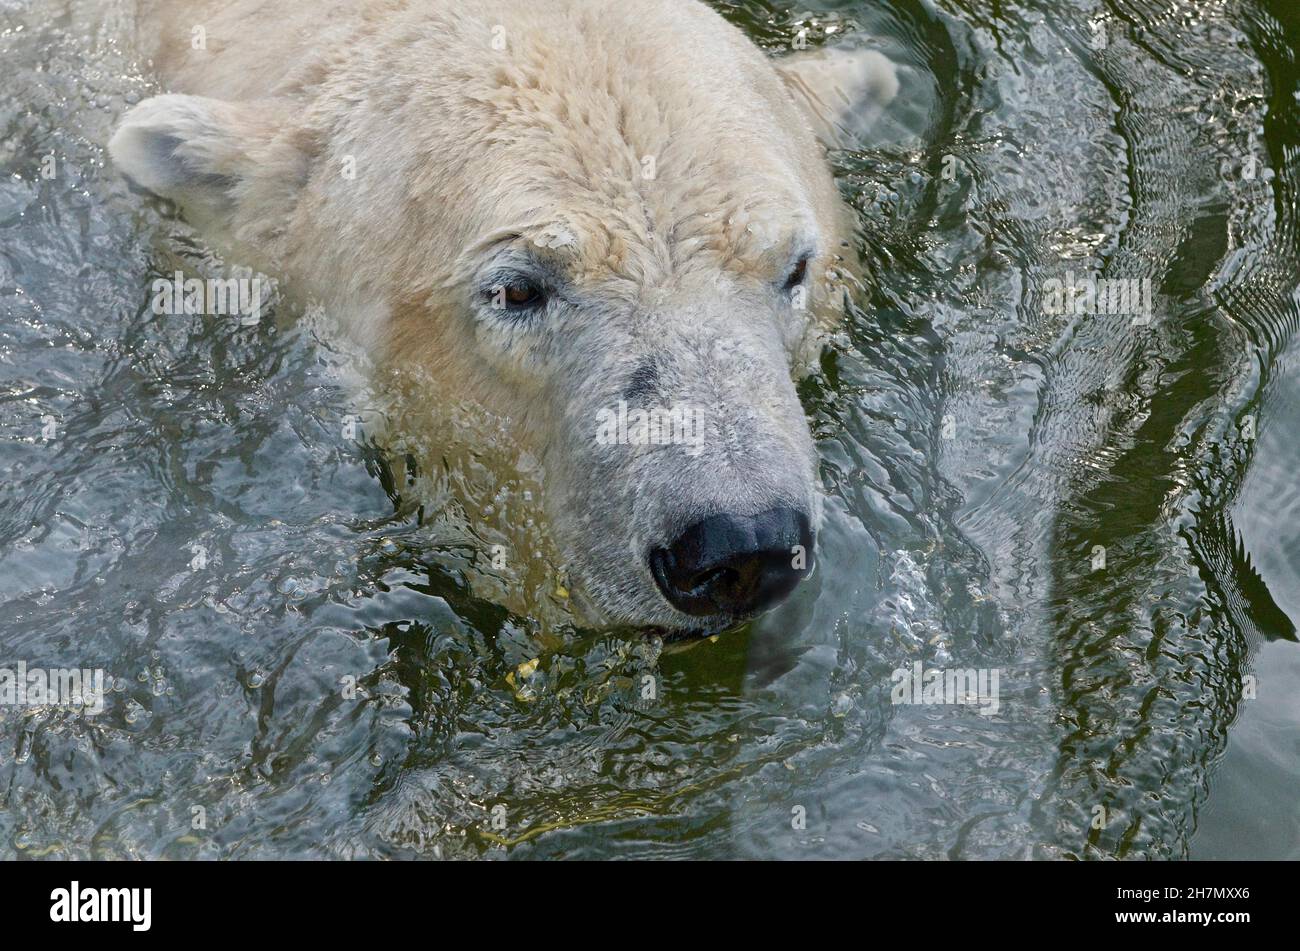 Swimming polar bear, polar bear in water, head of polar bear, portrait of polar bear, Zoo Hellabrunn, Munich, Bavaria, Germany Stock Photo